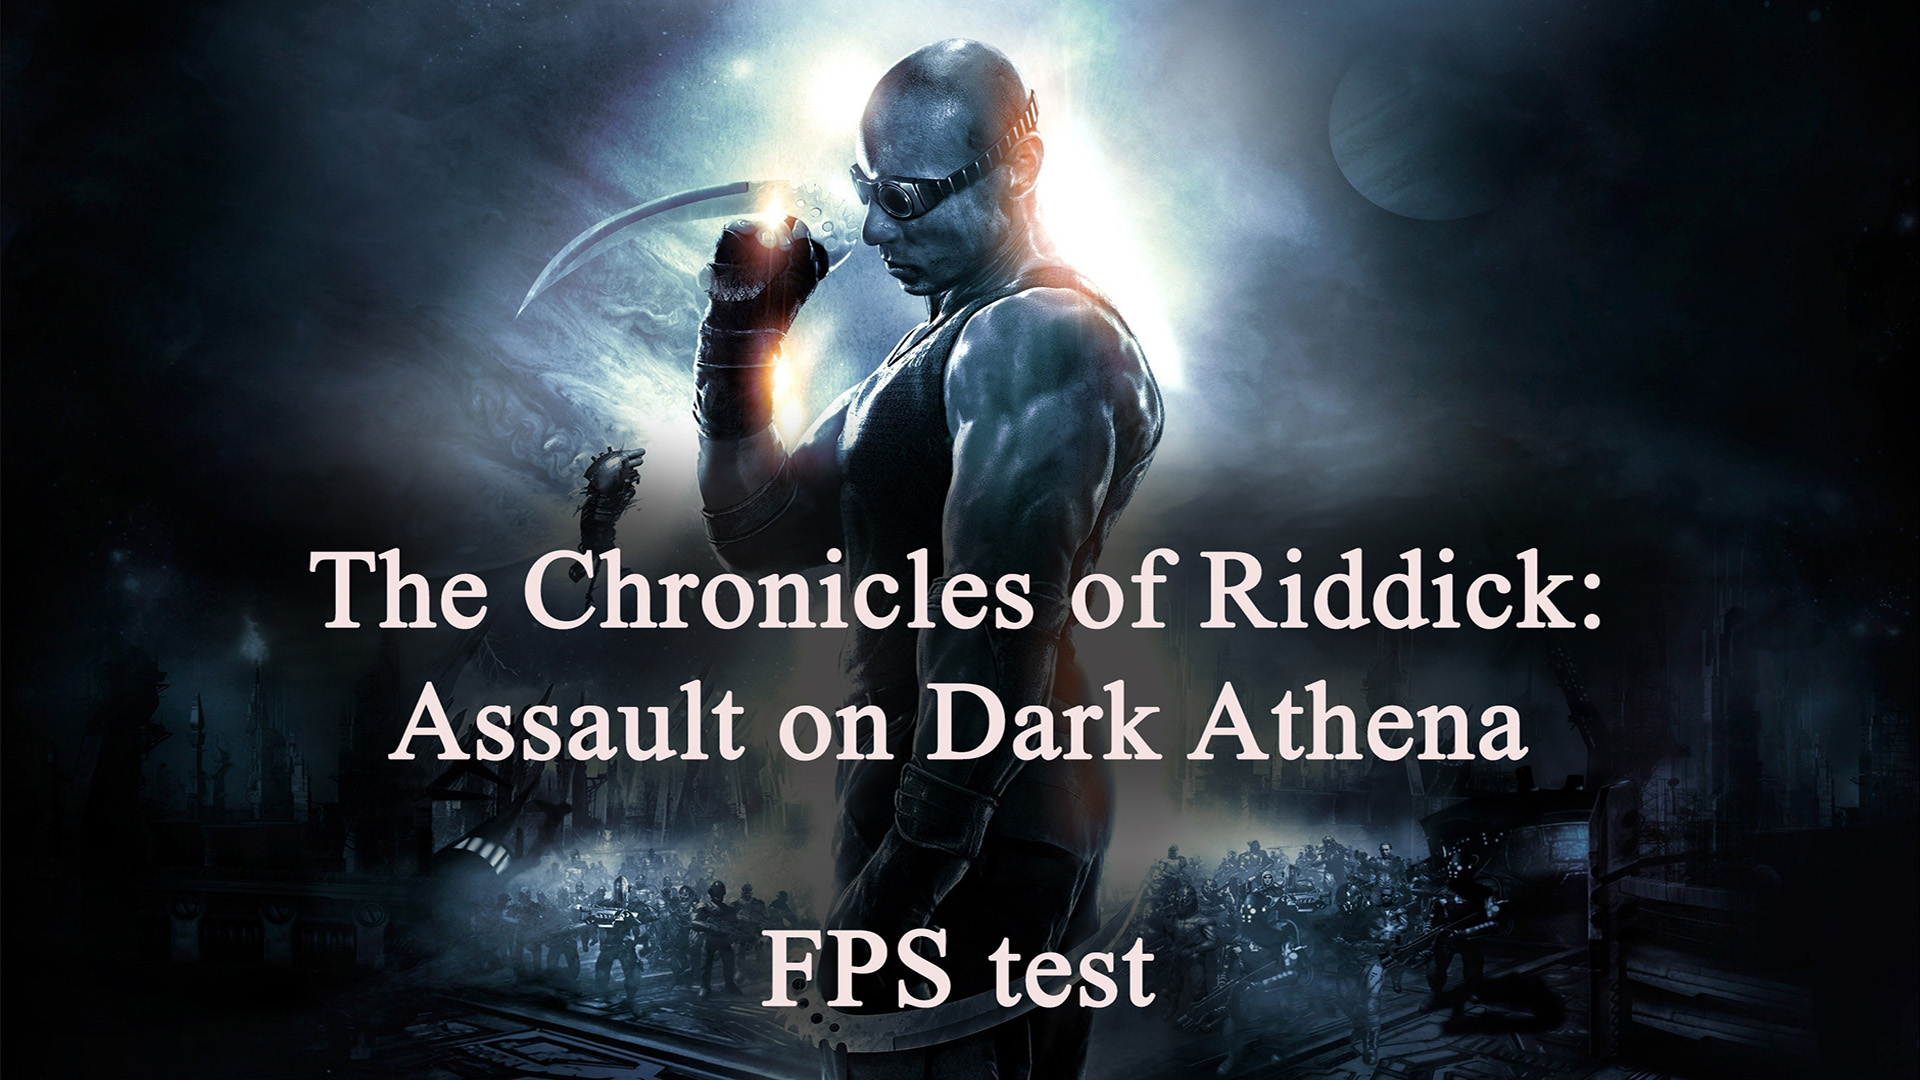 The Chronicles of Riddick: Assault on Dark Athena. FPS test